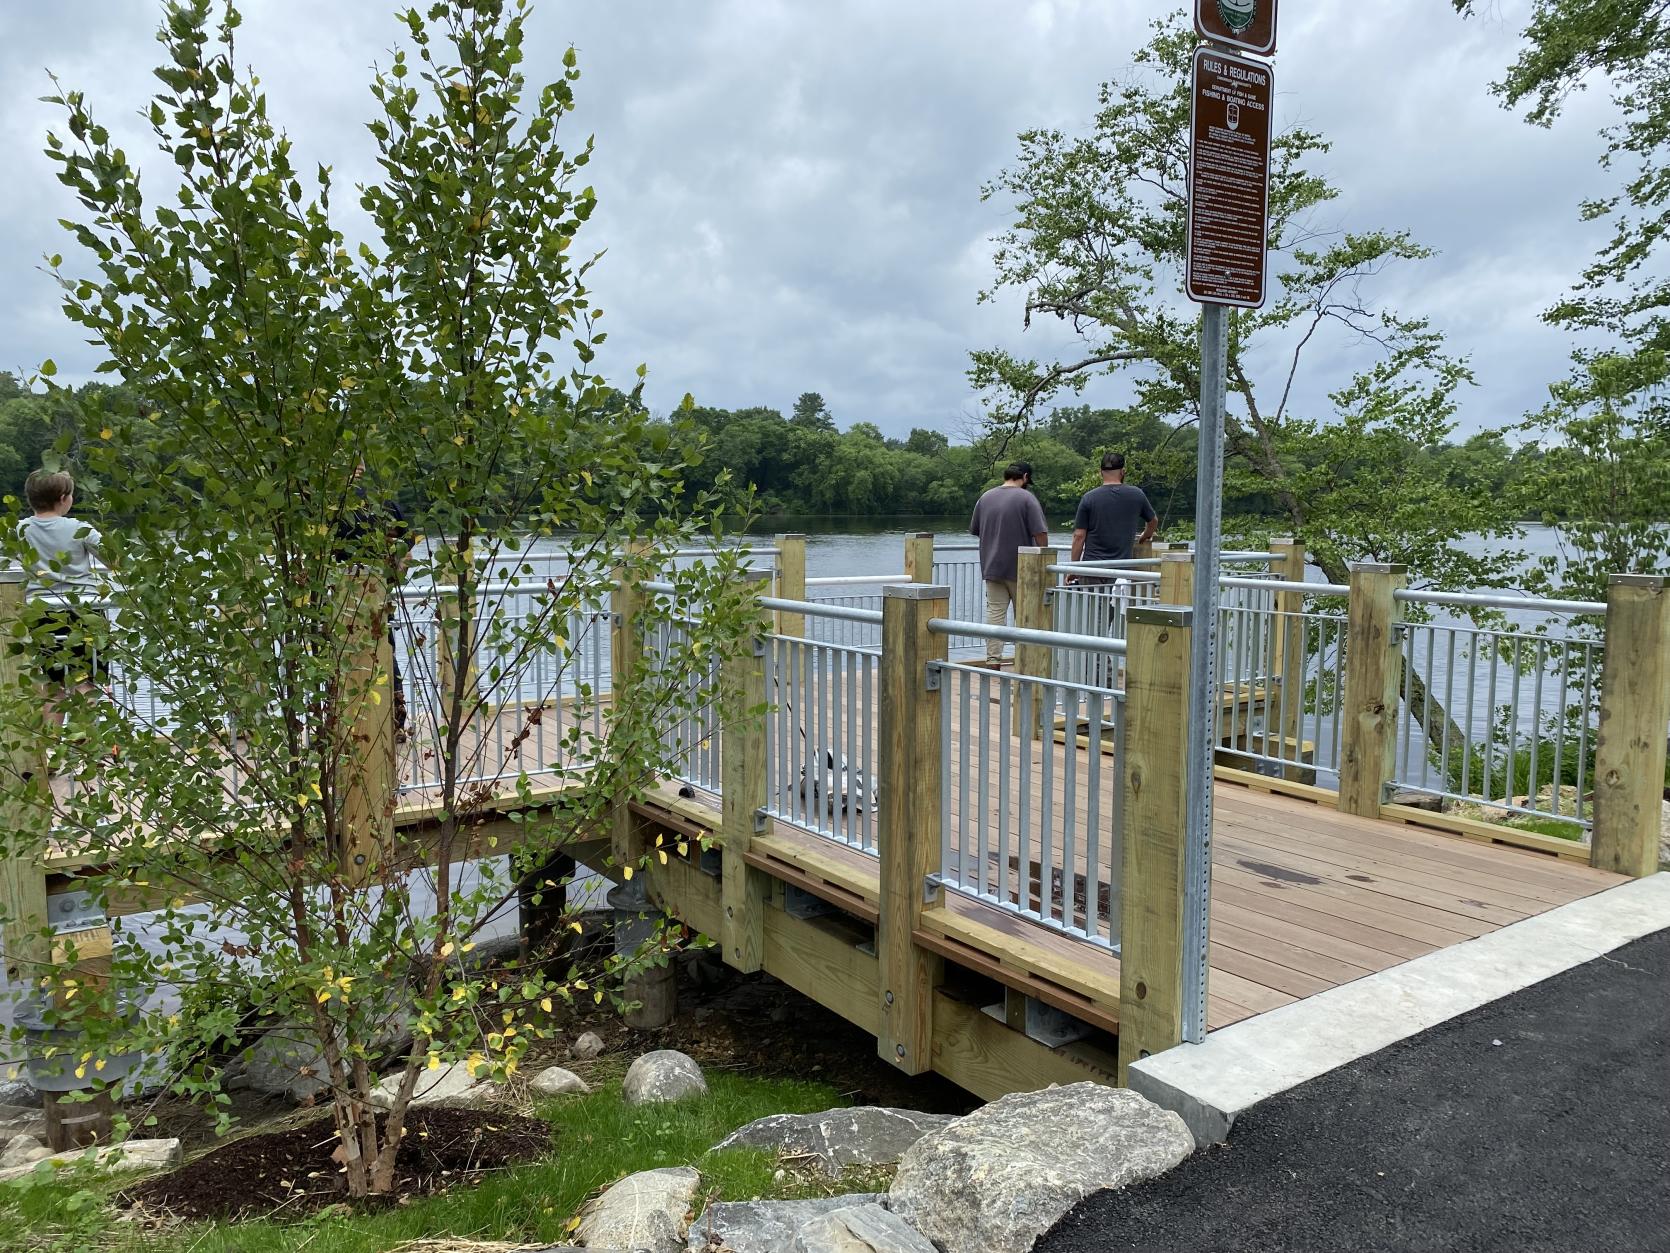 New recreational fishing platform in Methuen’s Raymond Martin Riverfront Park